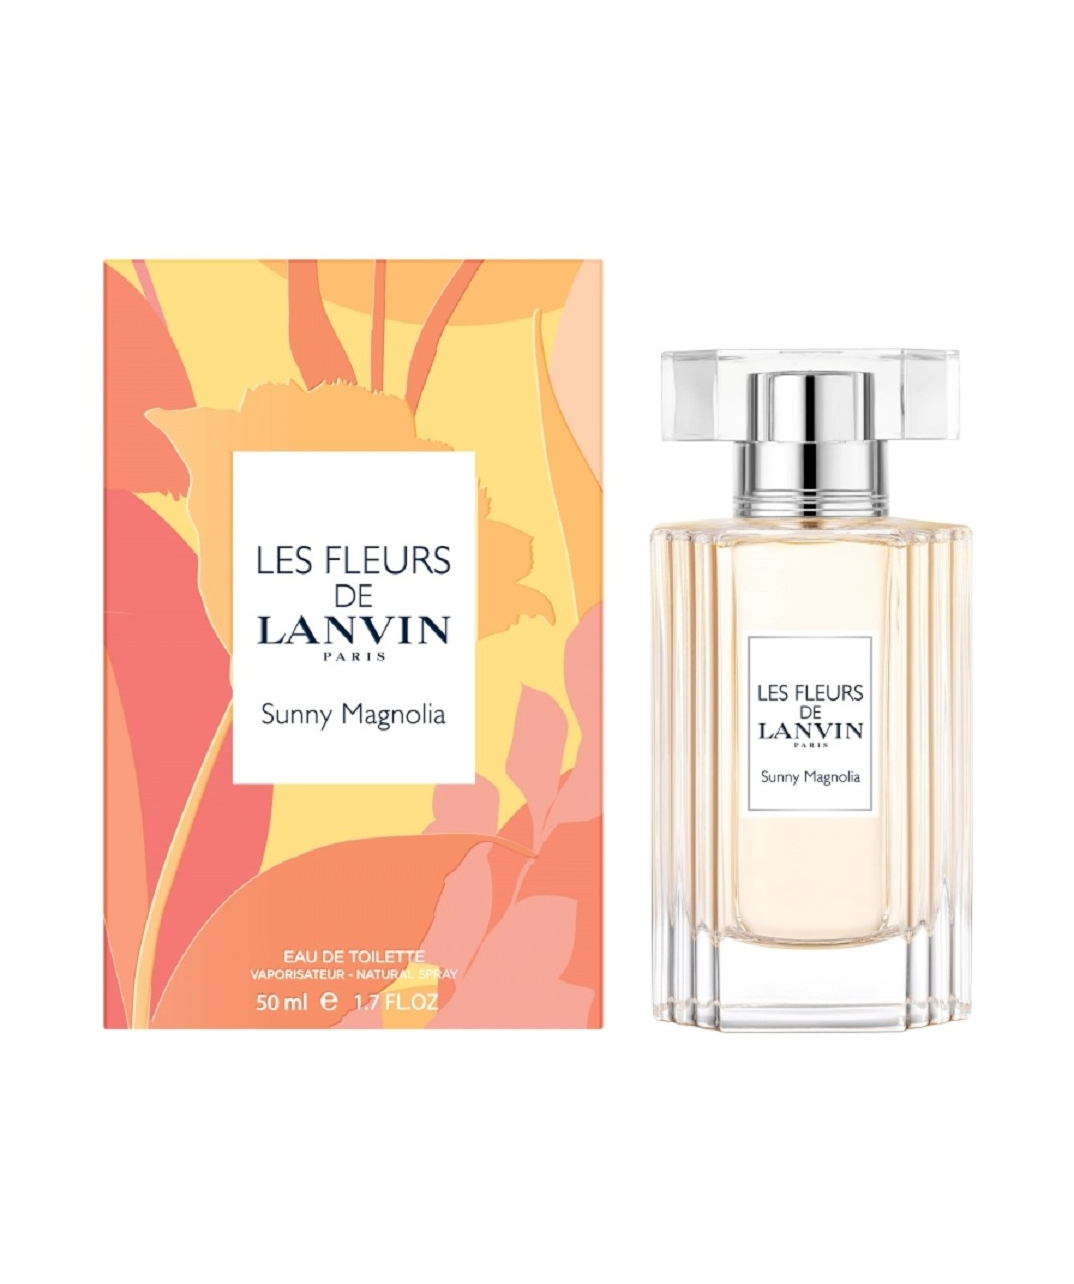 Perfume «Lanvin» Les Fleurs De Sunny Magnolia, for women, 50 ml